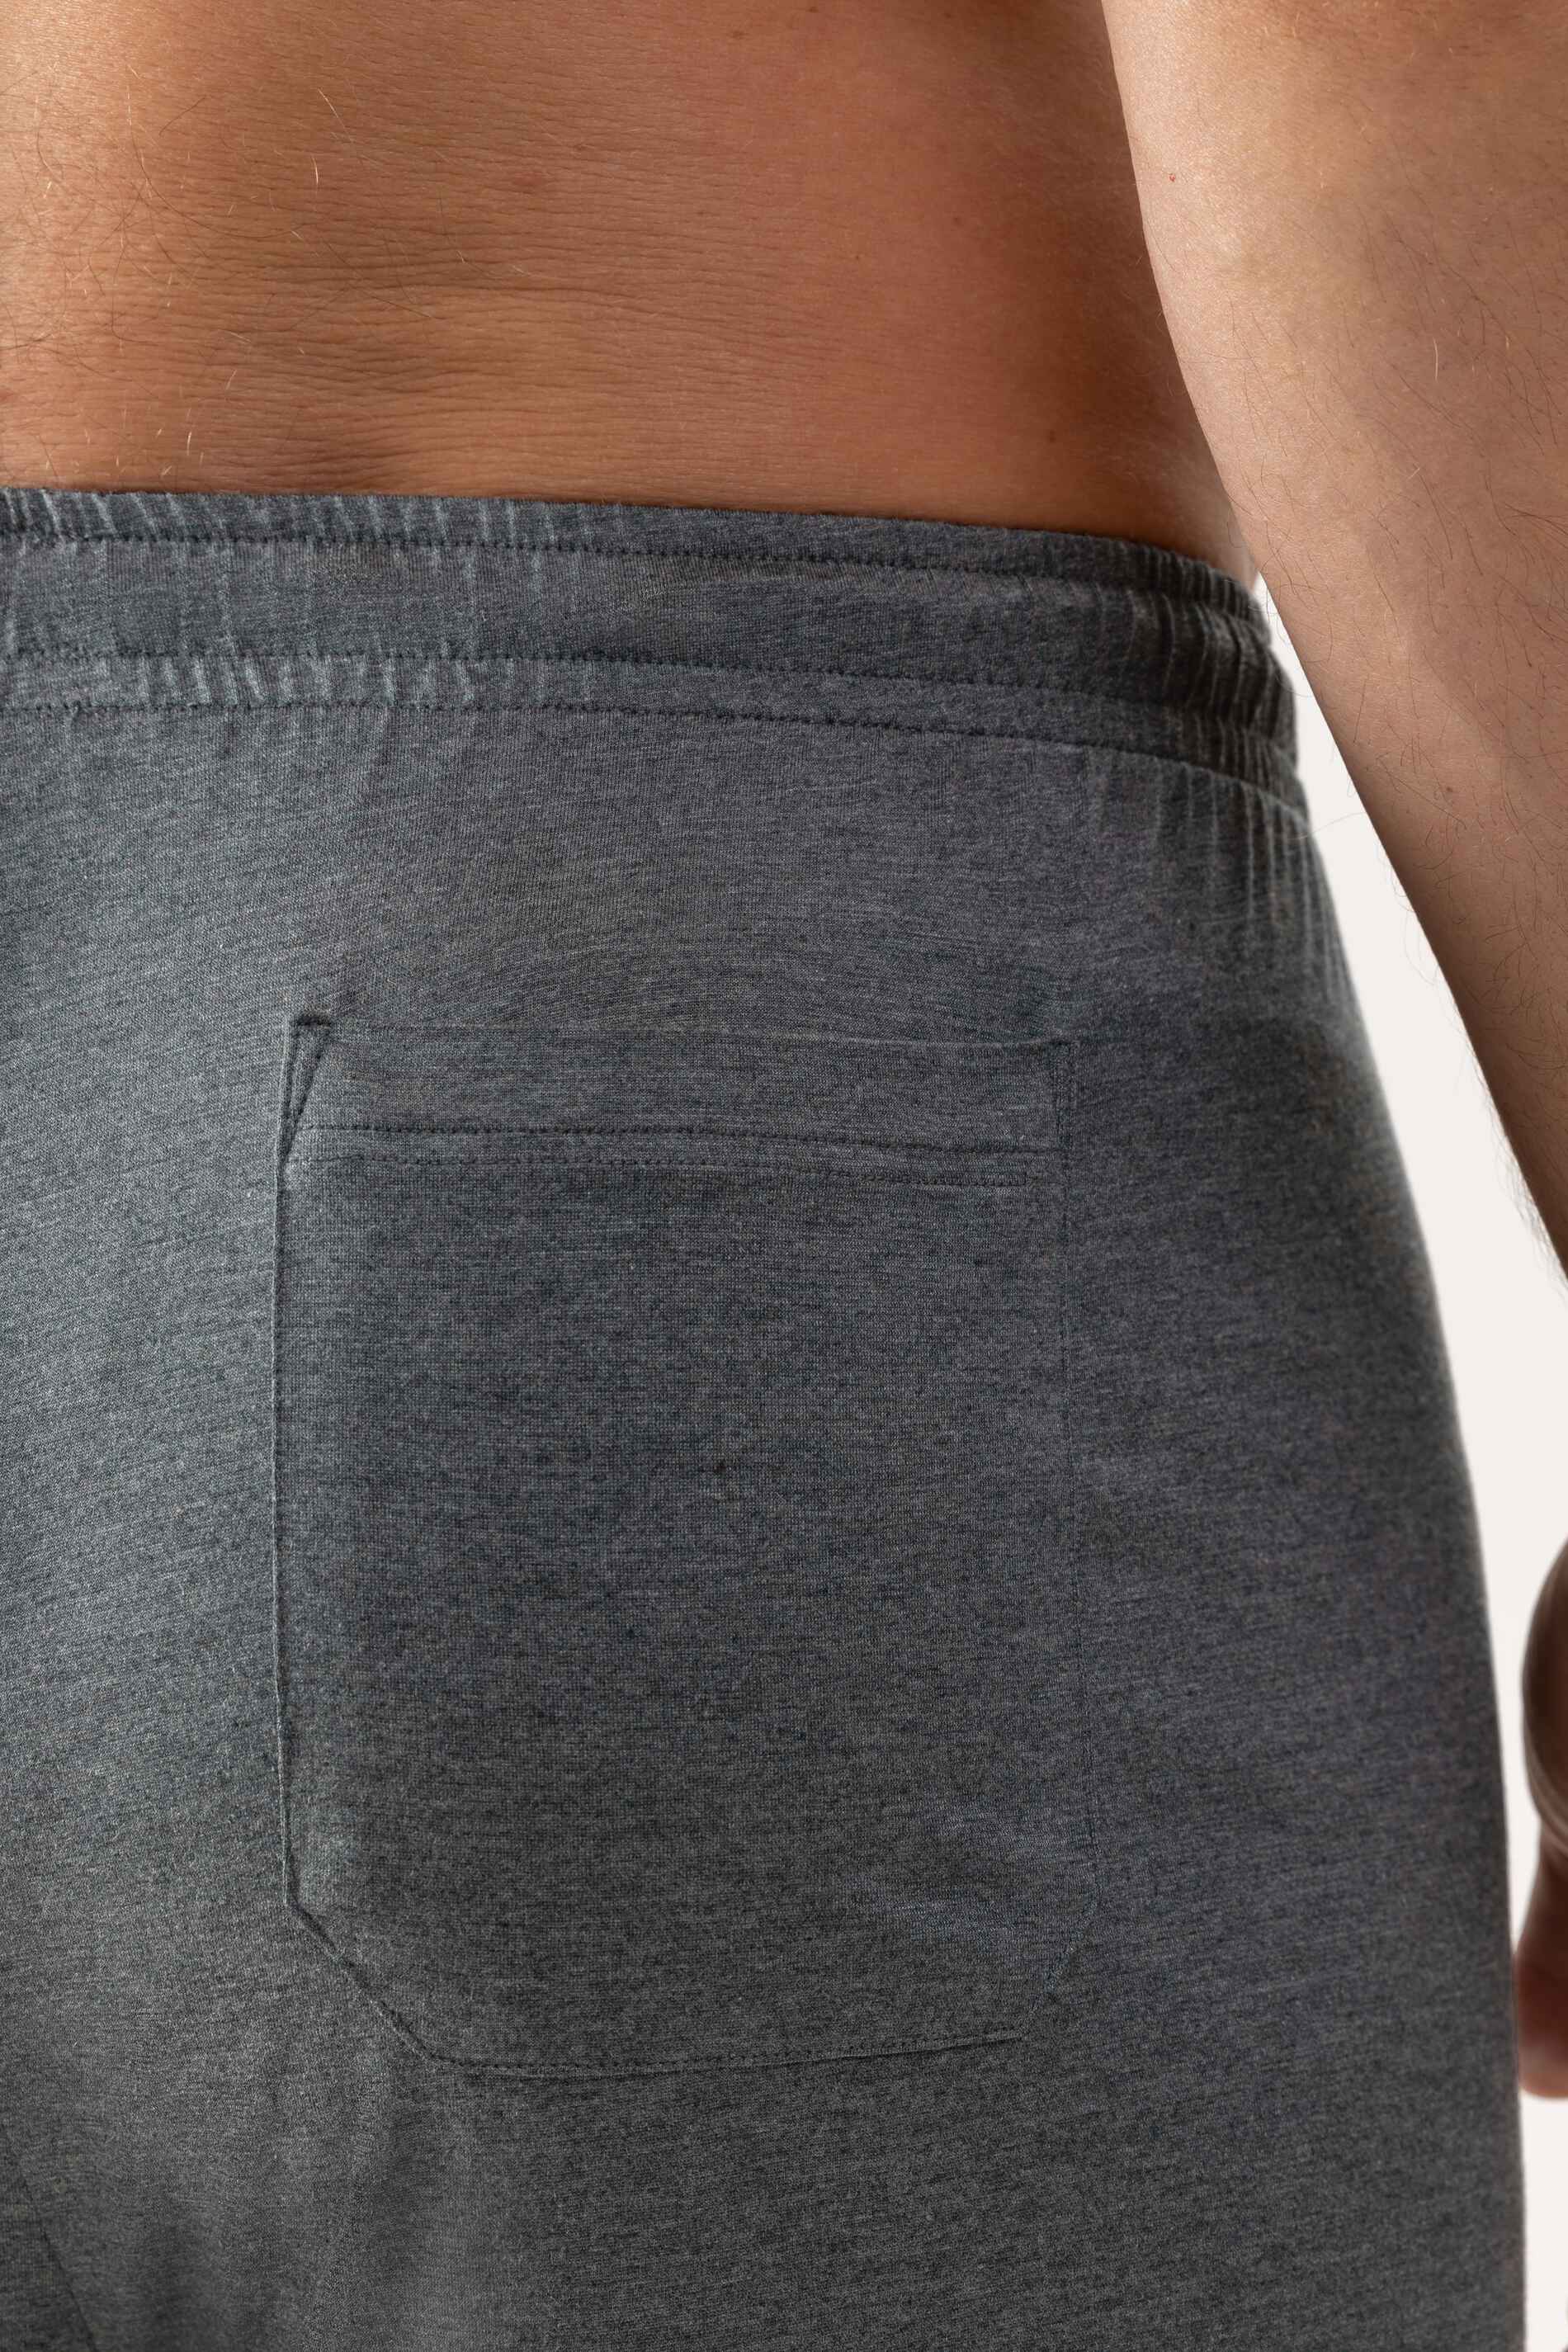 Short pants Serie Inverness Detail View 02 | mey®